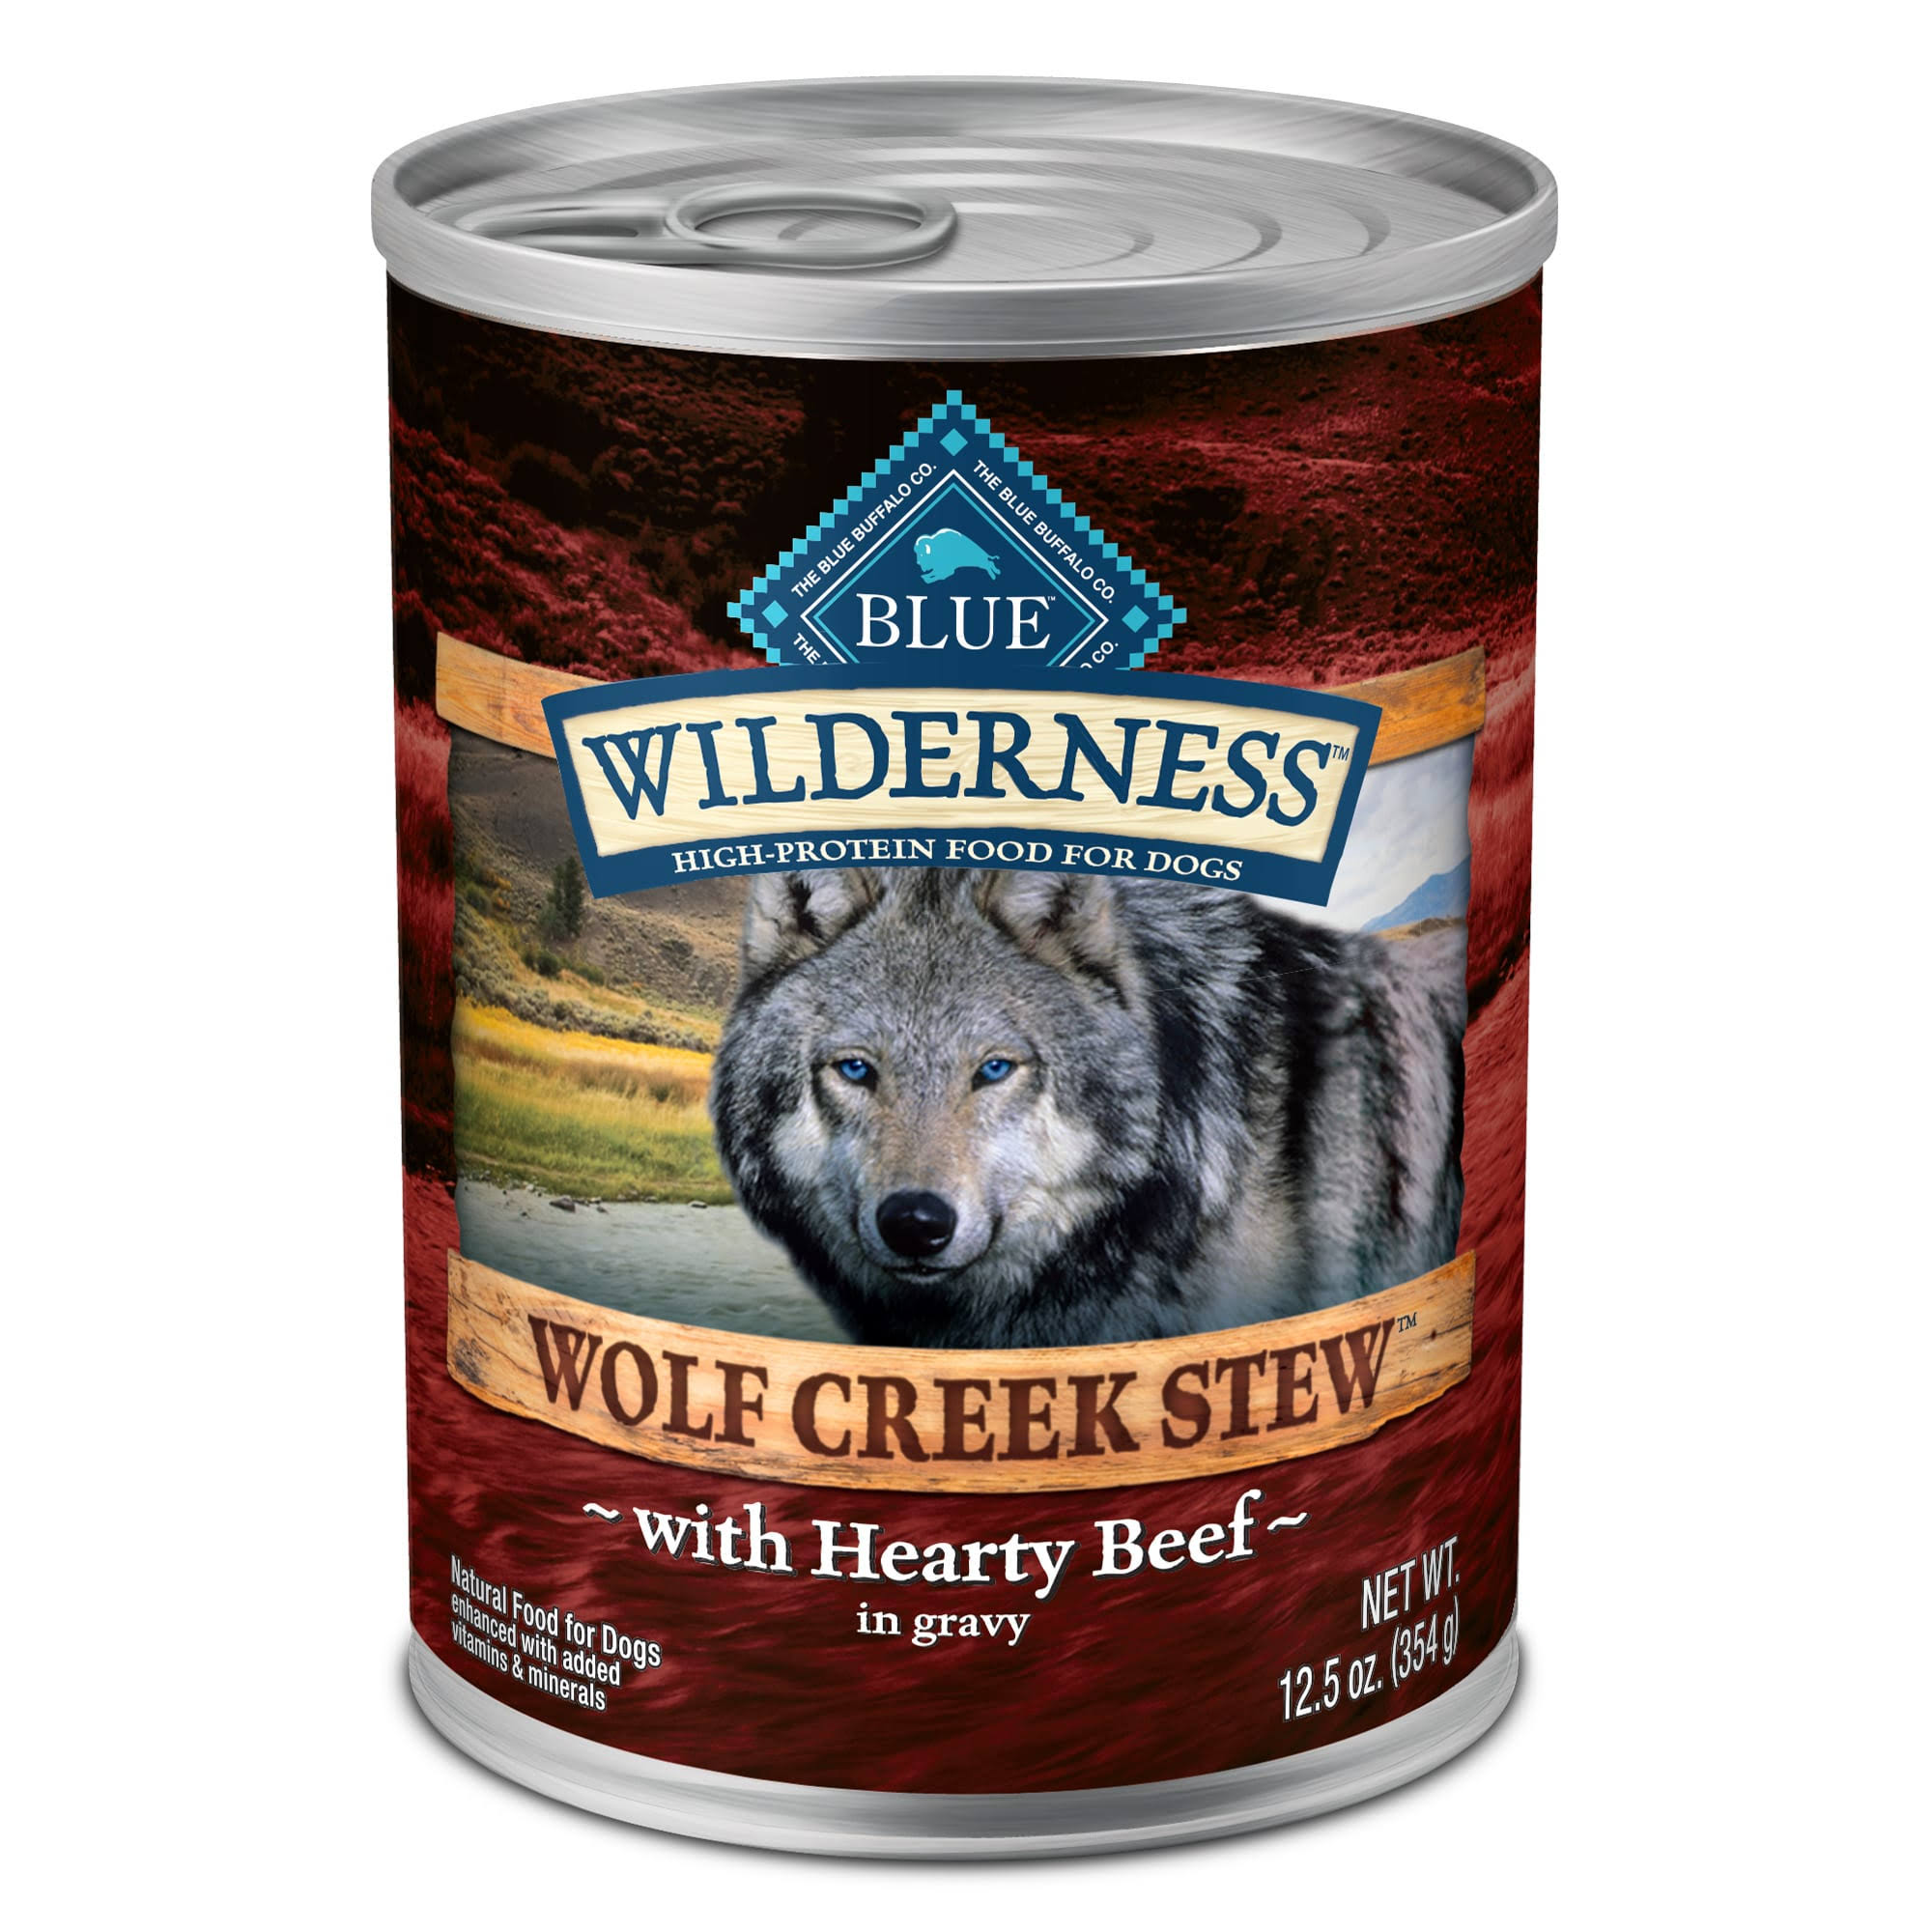 Blue Buffalo Wilderness Canned Dog Food - Wolf Creek Stew